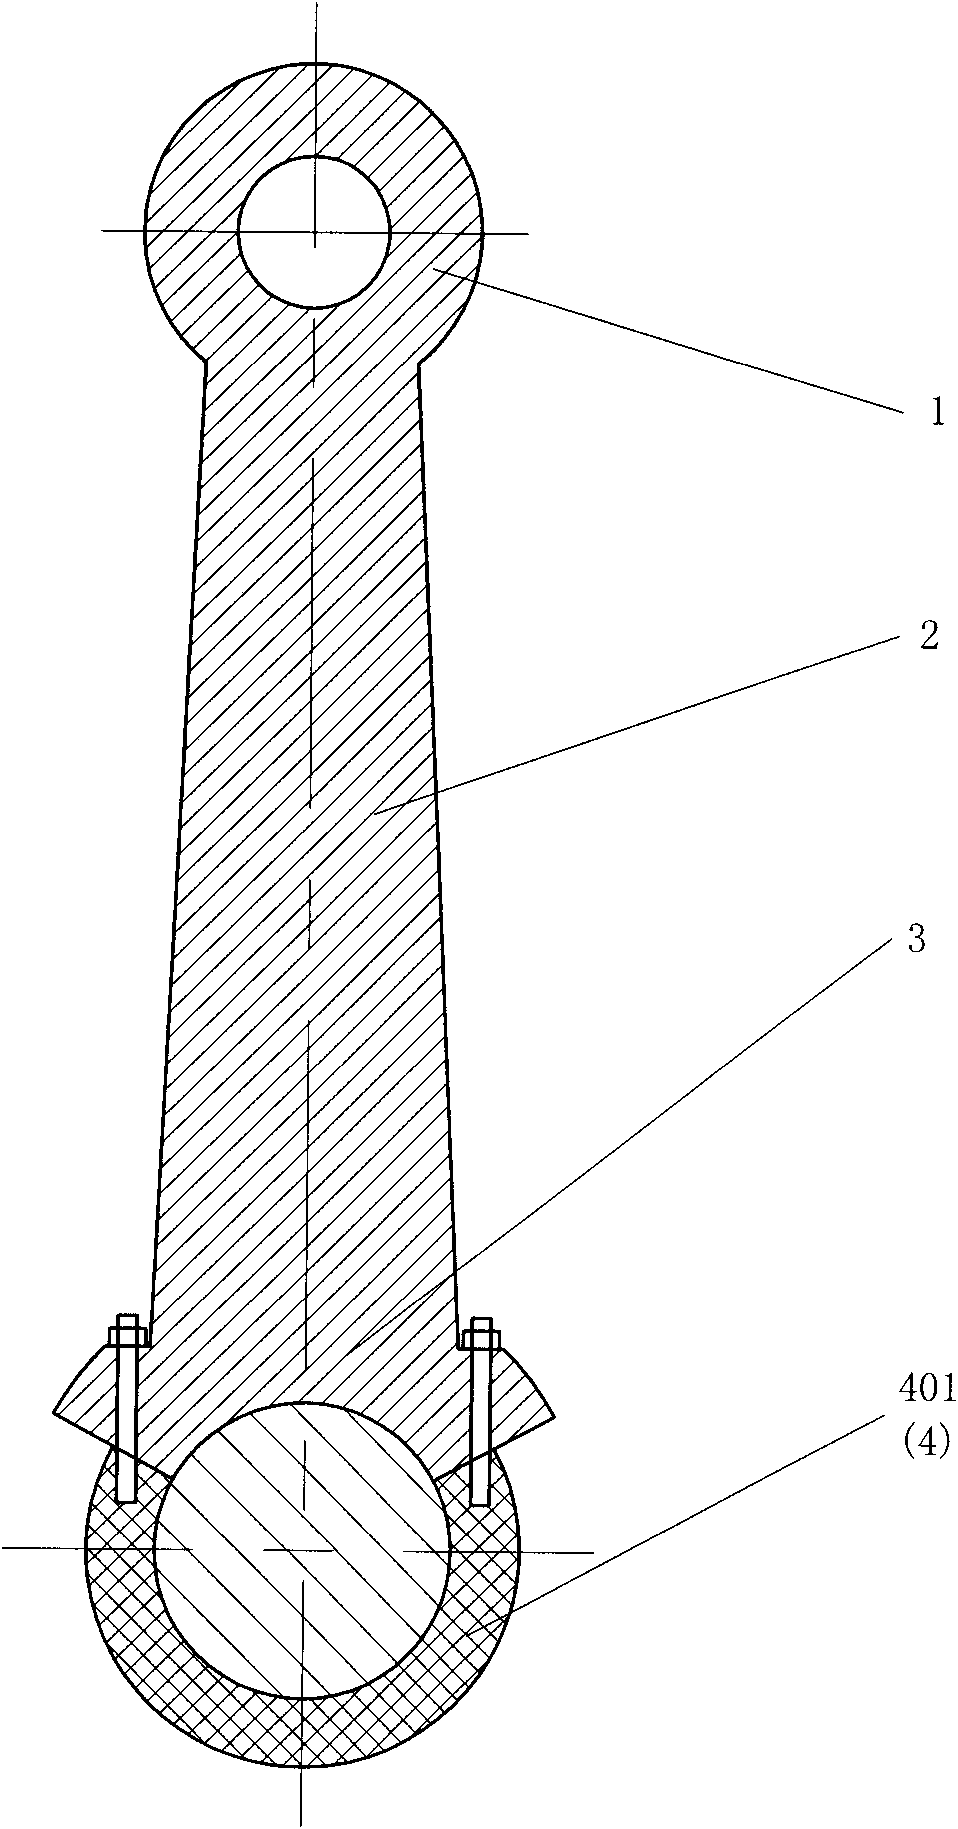 Non-rigid cover connecting rod